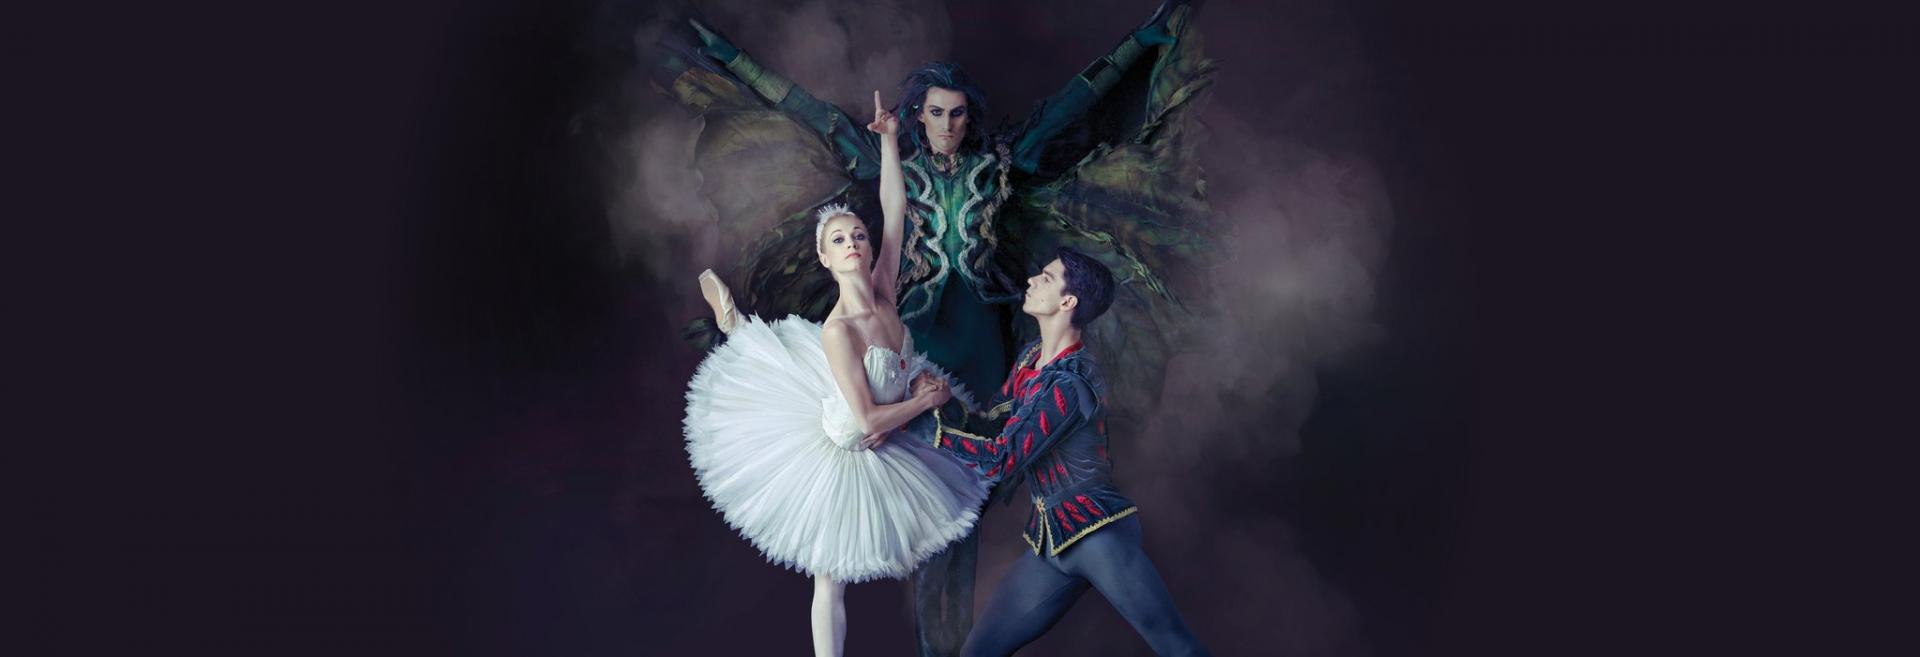 Ballet: Swan Lake, Opera House Budapest, 23 March